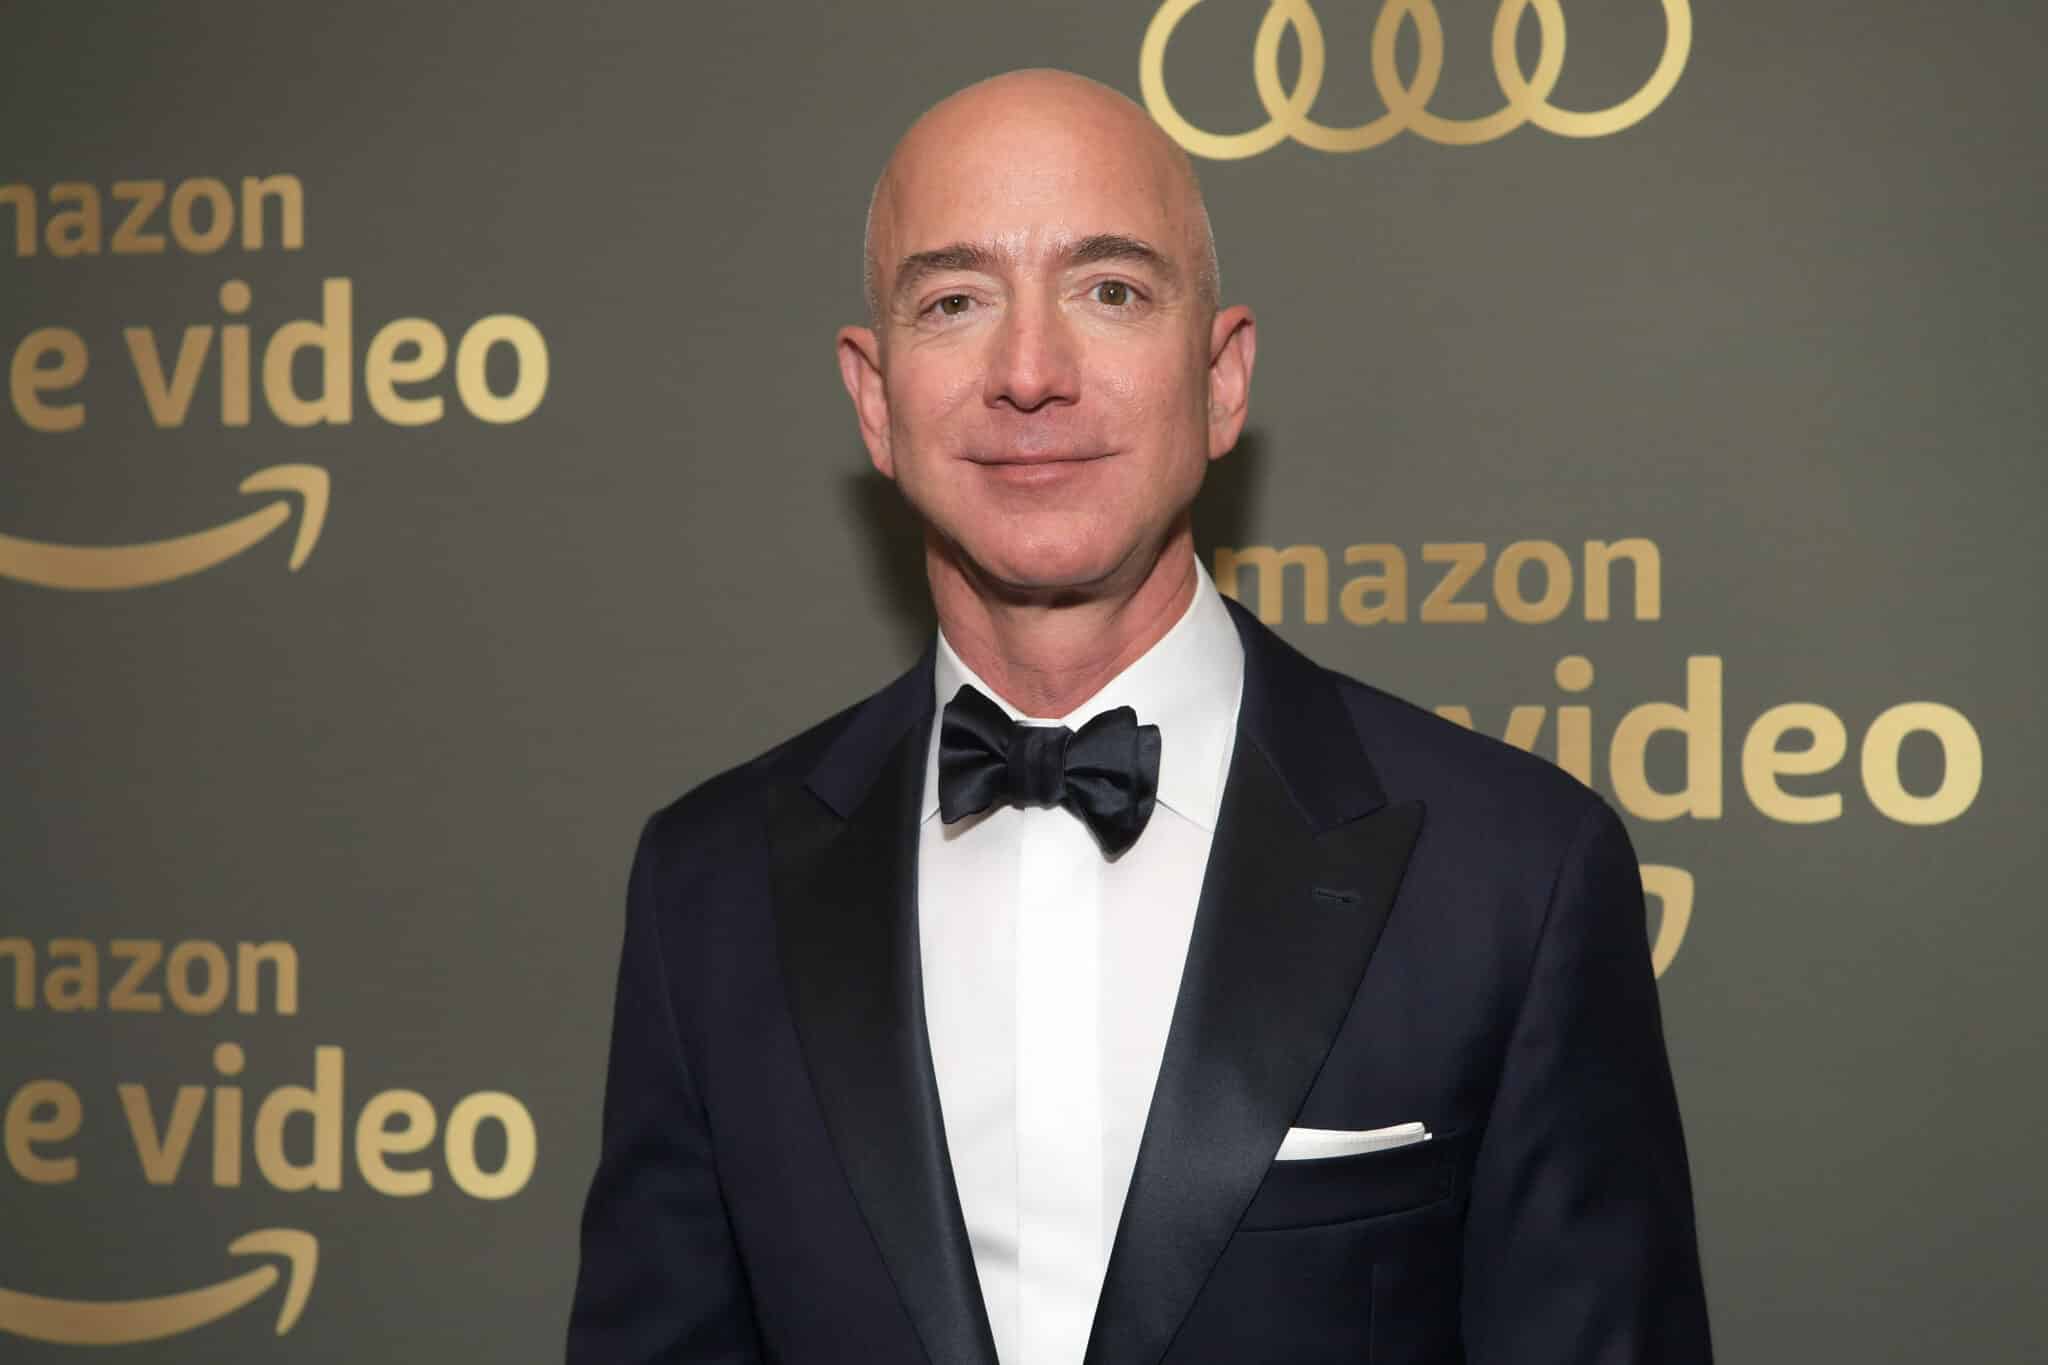 BREAKING: Jeff Bezos Stepping Down as Amazon CEO